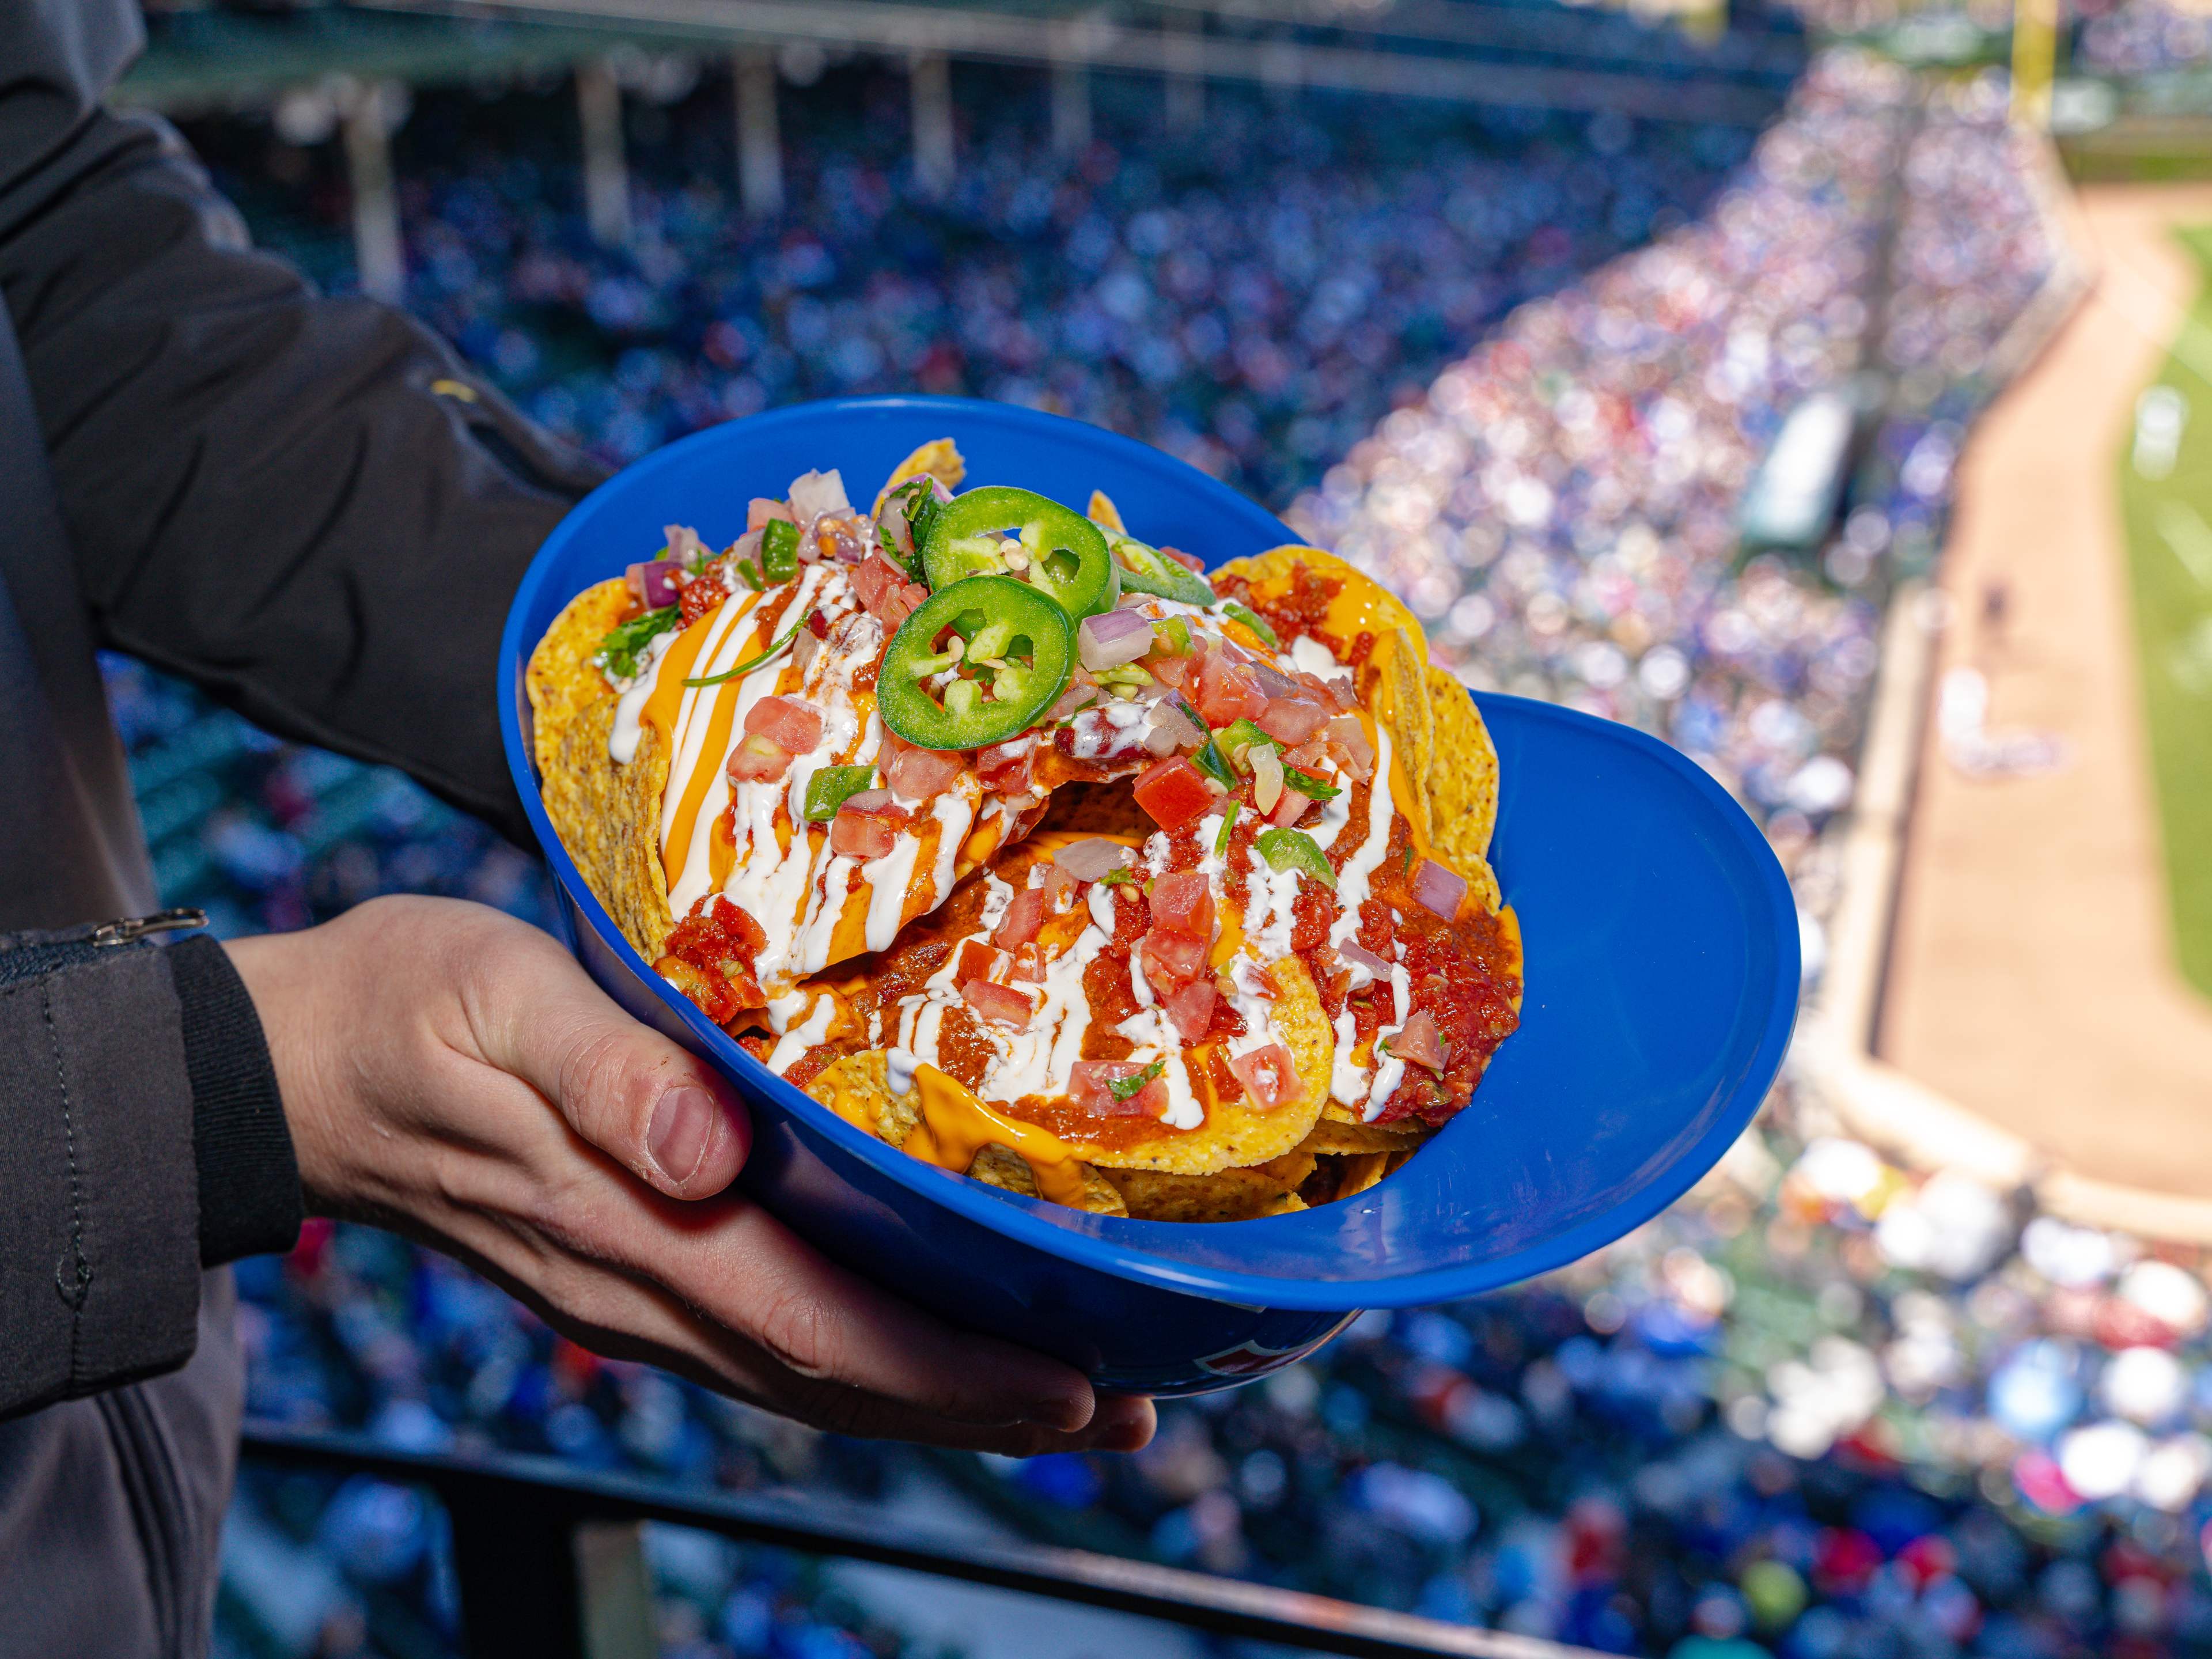 A Cubs baseball helmet full of loaded nachos.